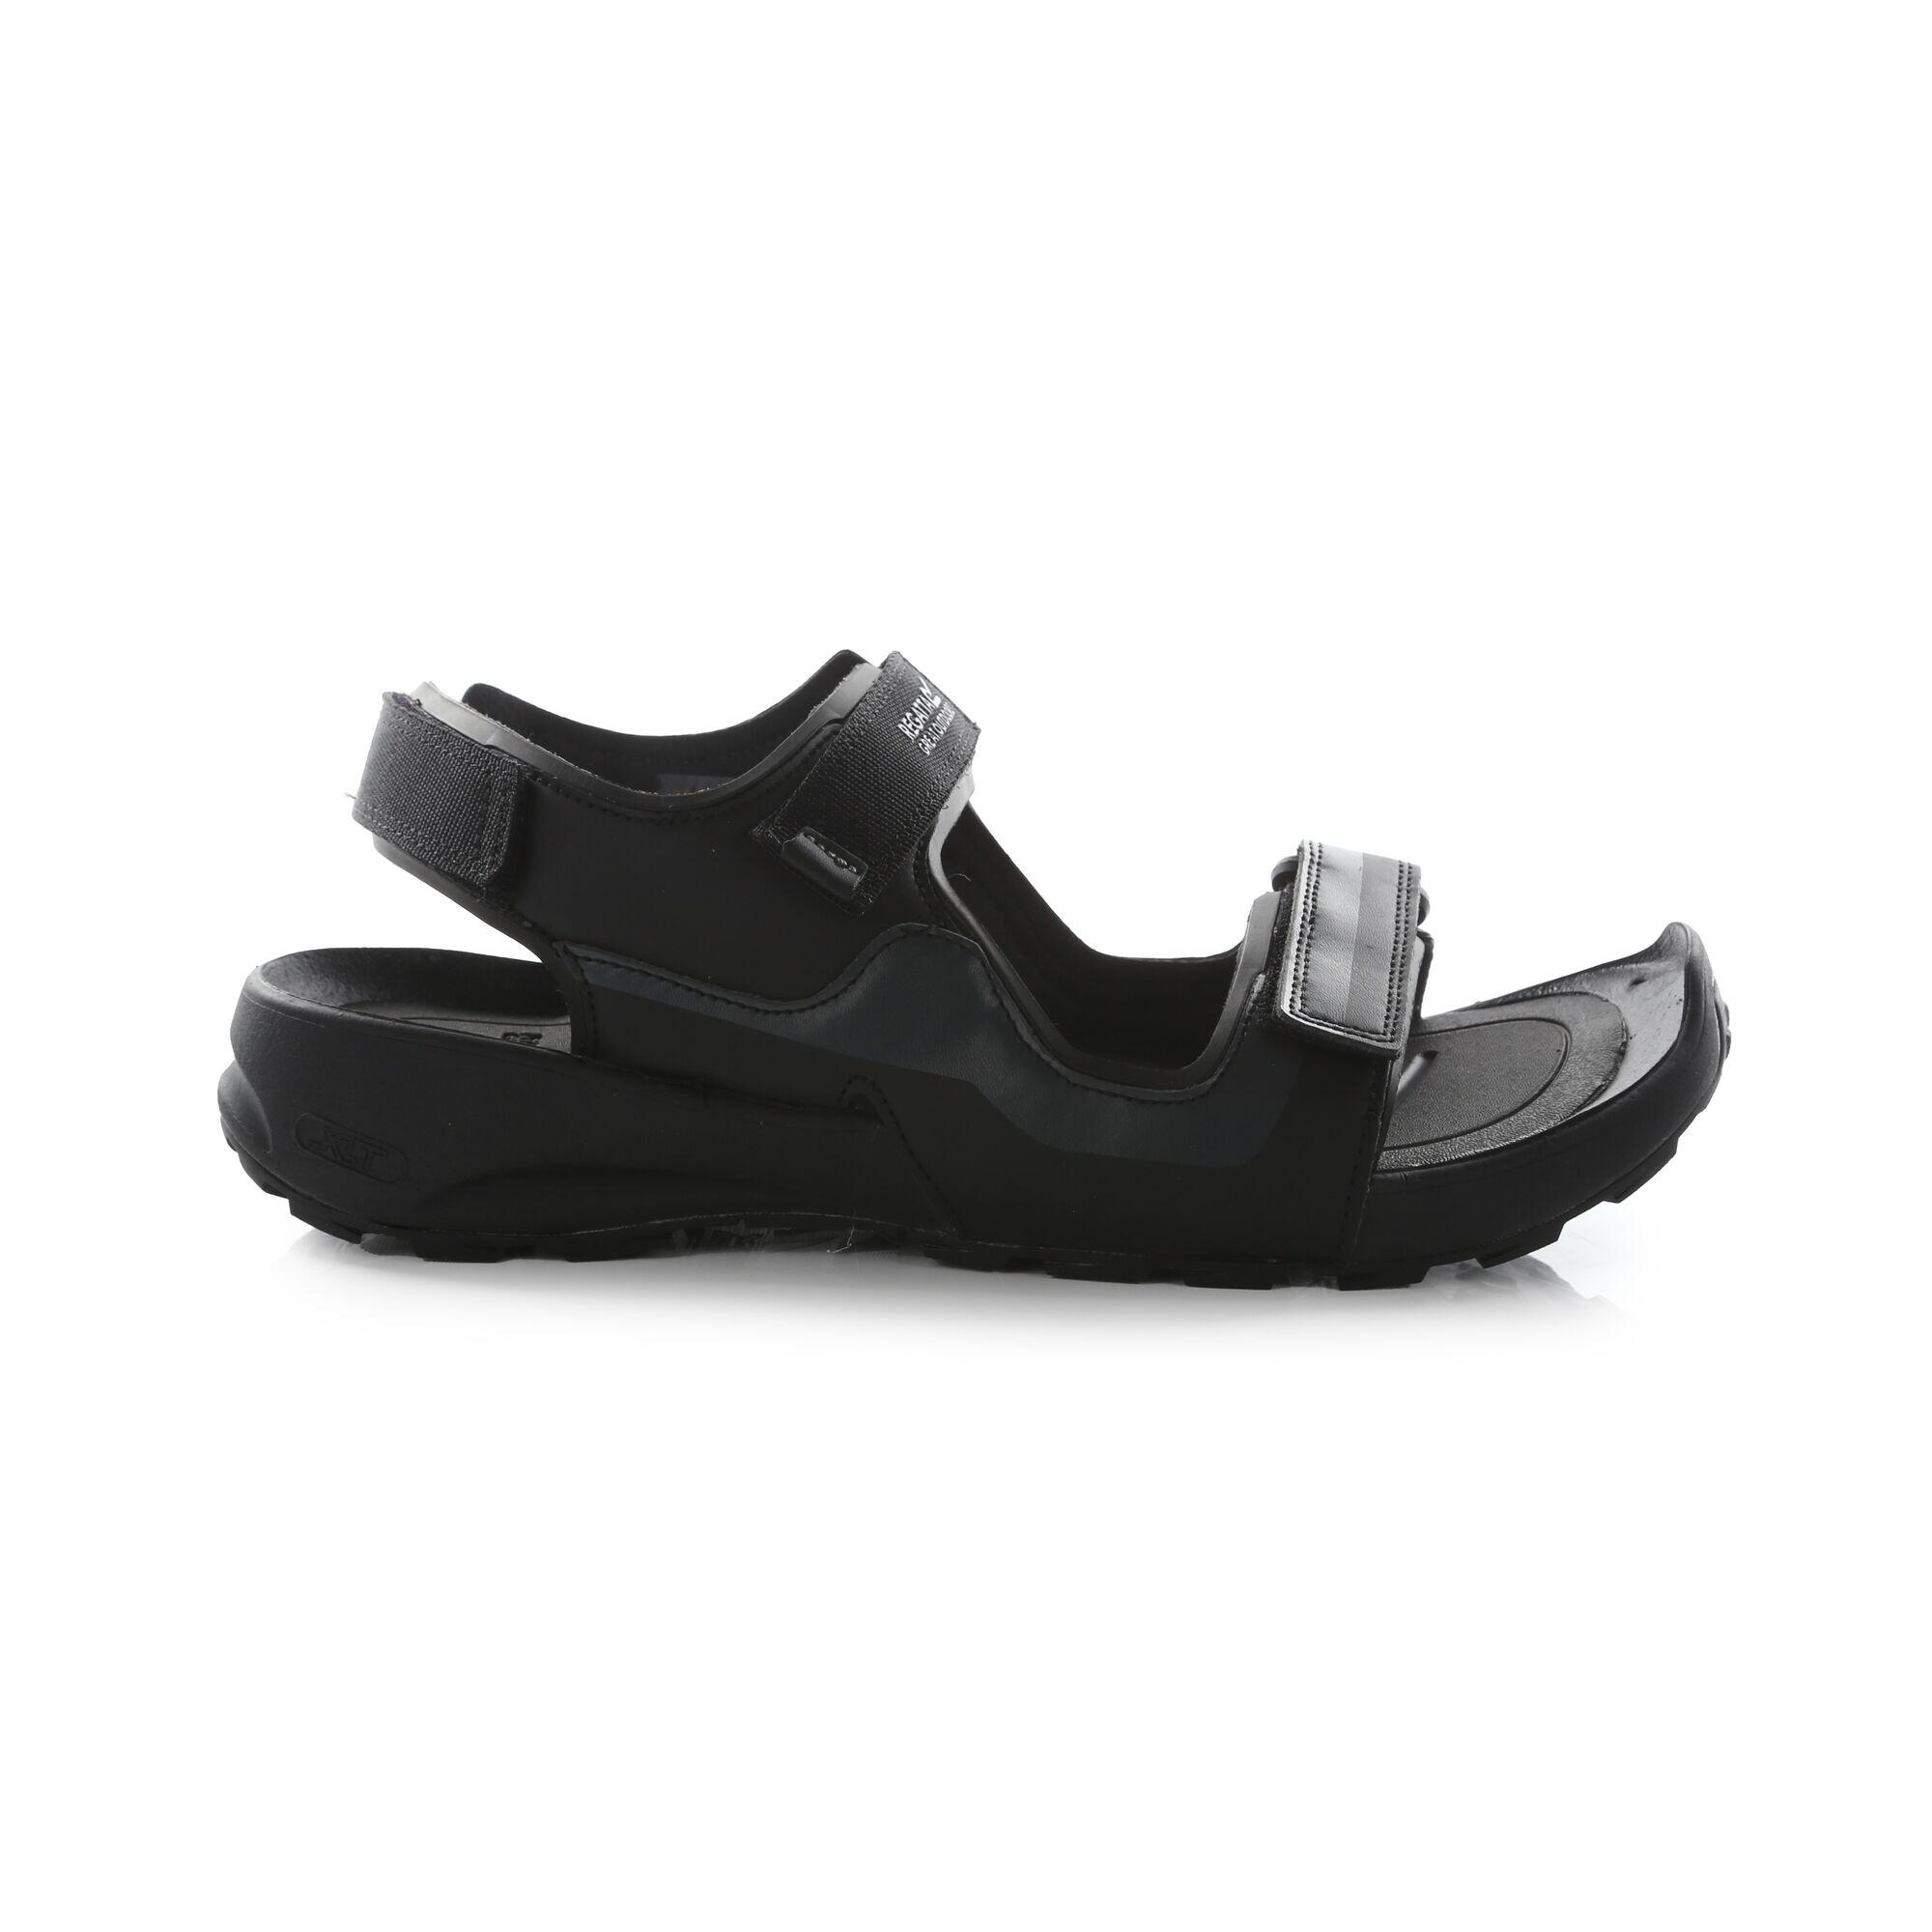 Samaris Men's Walking Sandals - Black Briar 2/5